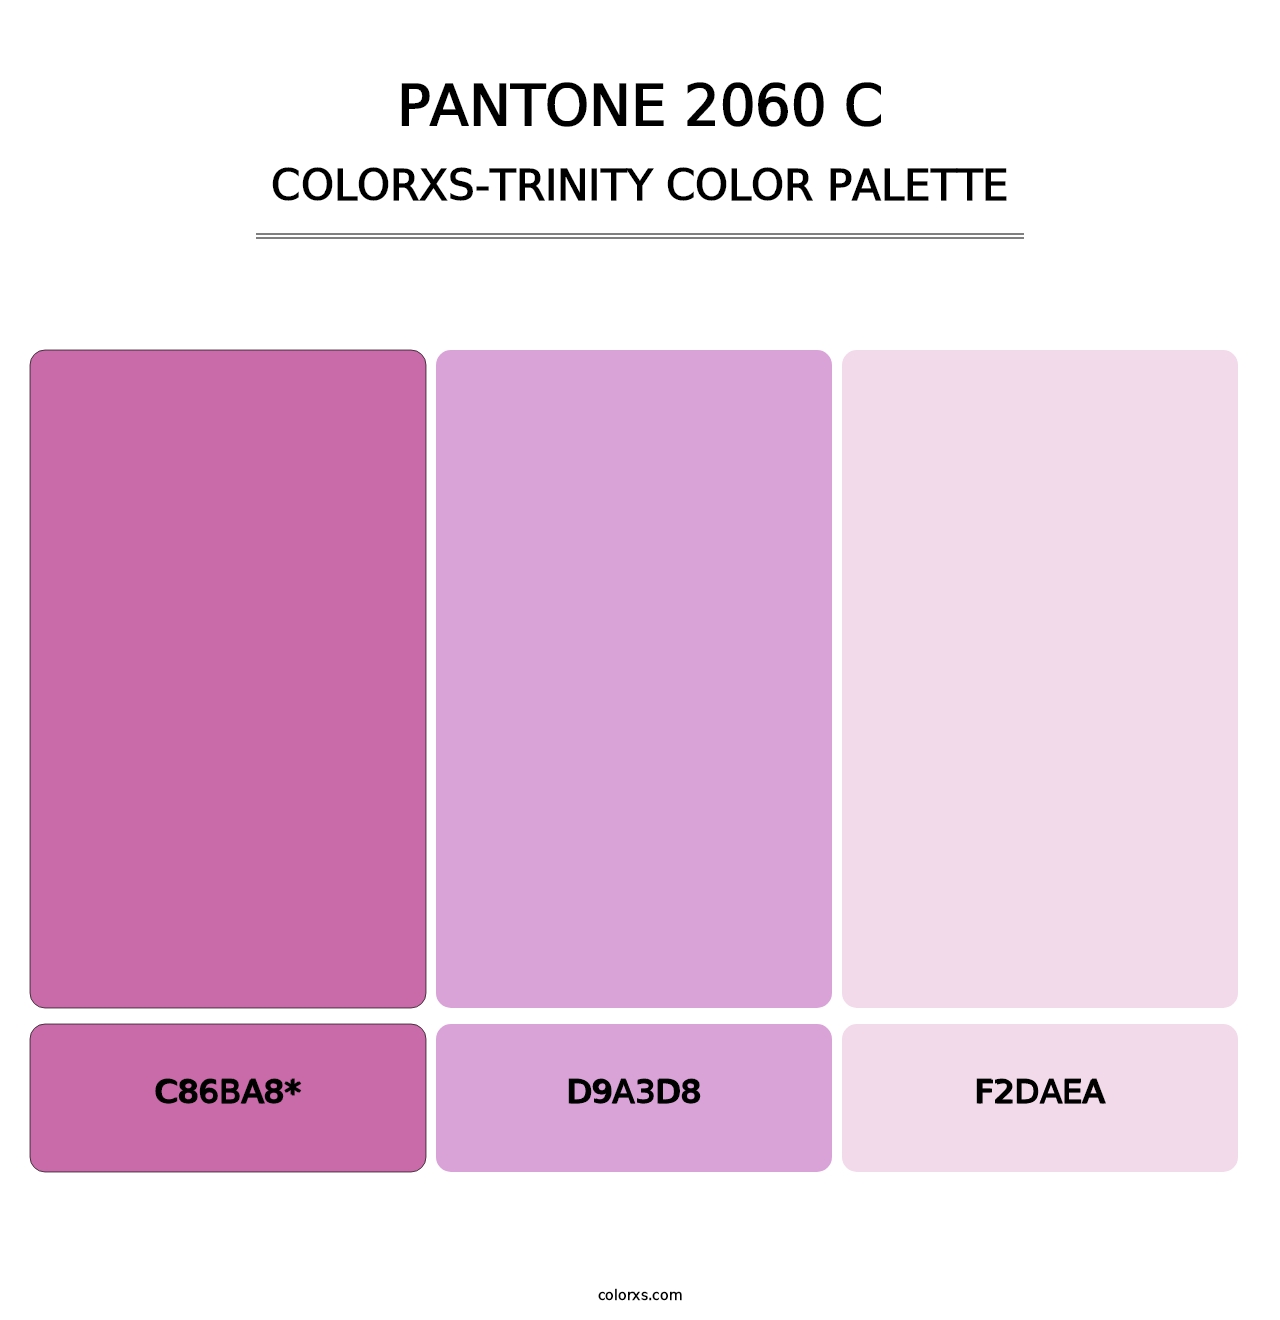 PANTONE 2060 C - Colorxs Trinity Palette